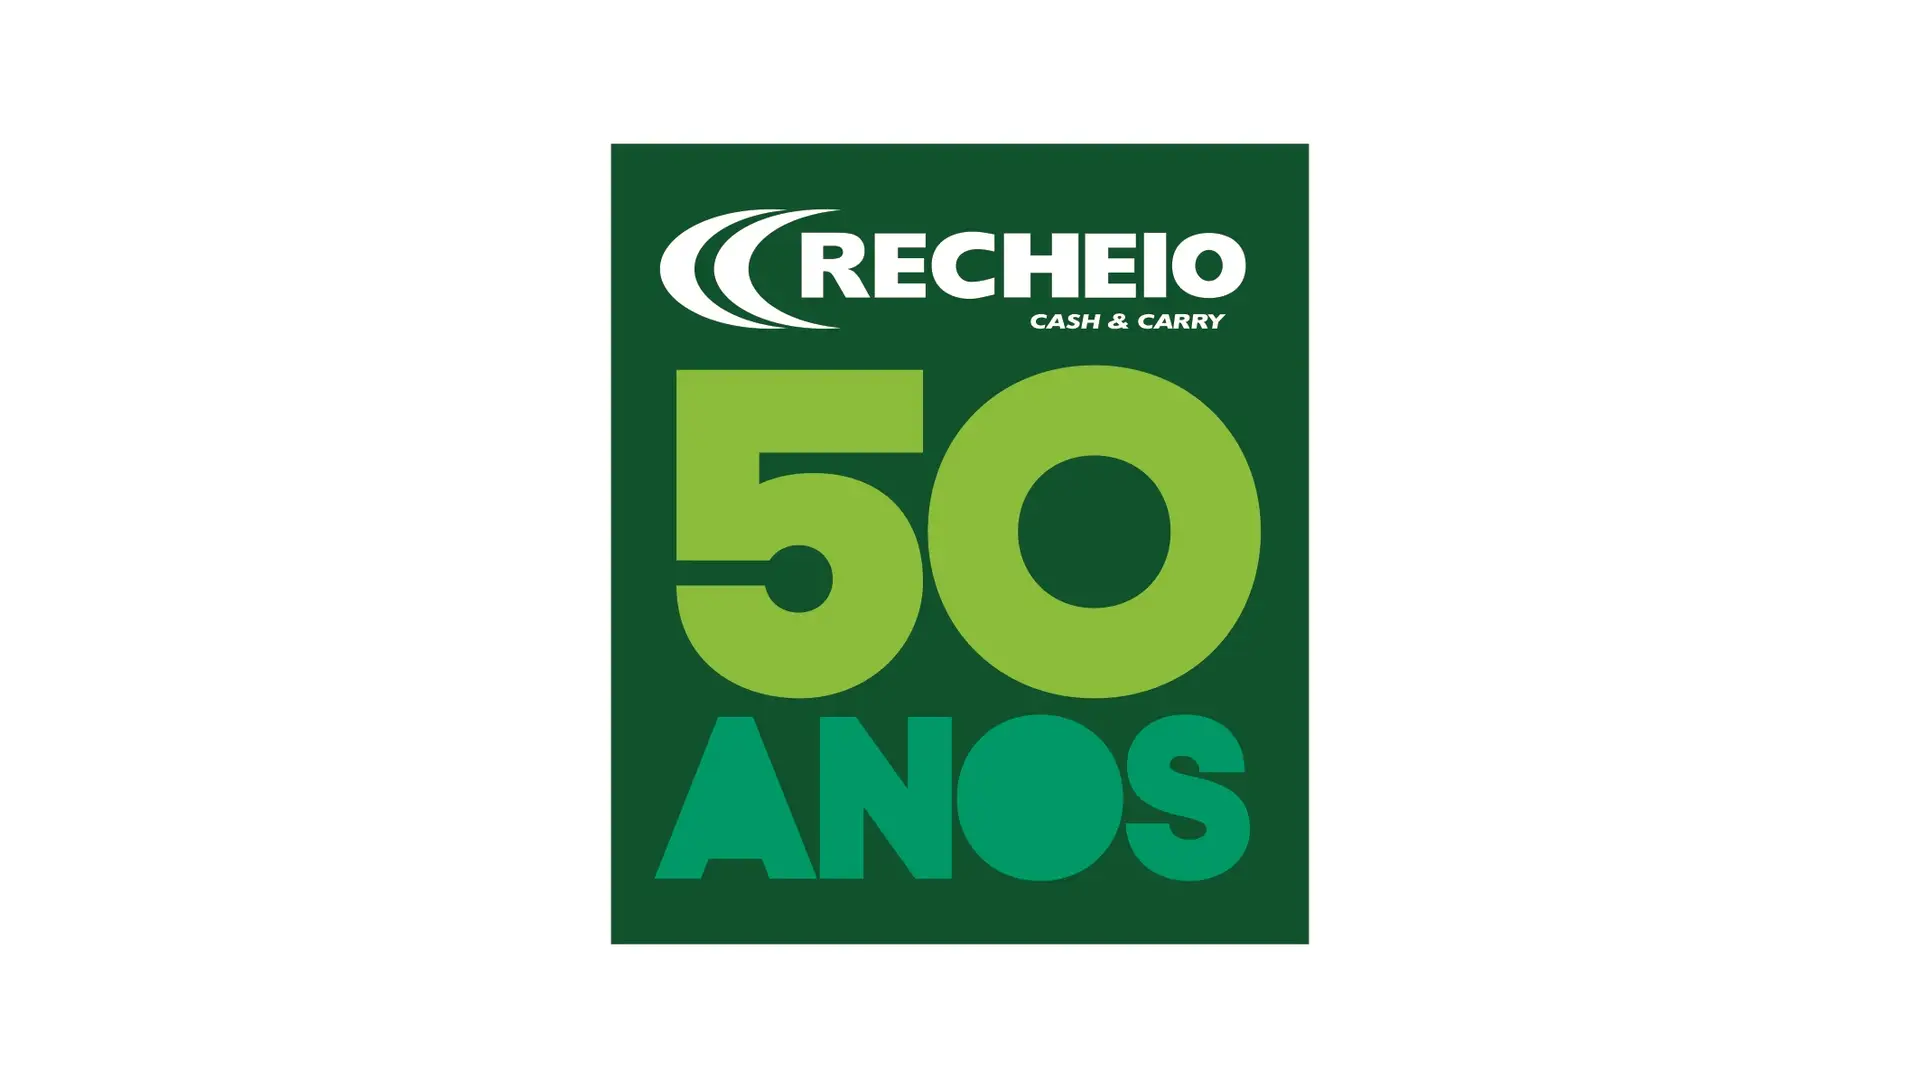 2014: Belcanto ganha duas estrelas Michelin e José Avillez